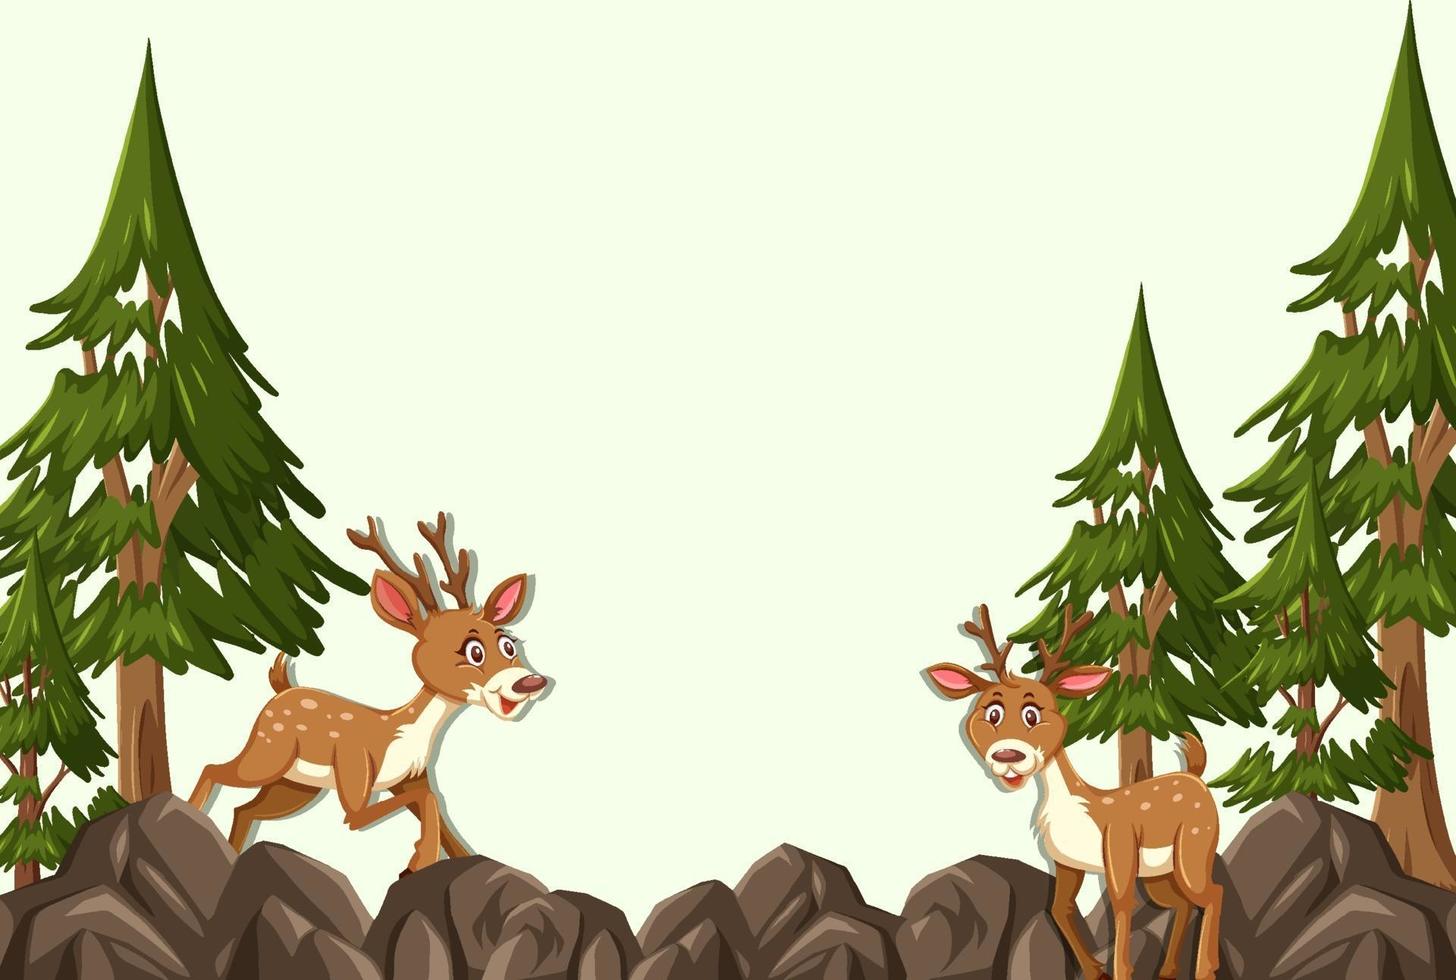 Deer cartoon character with blank forest scene vector